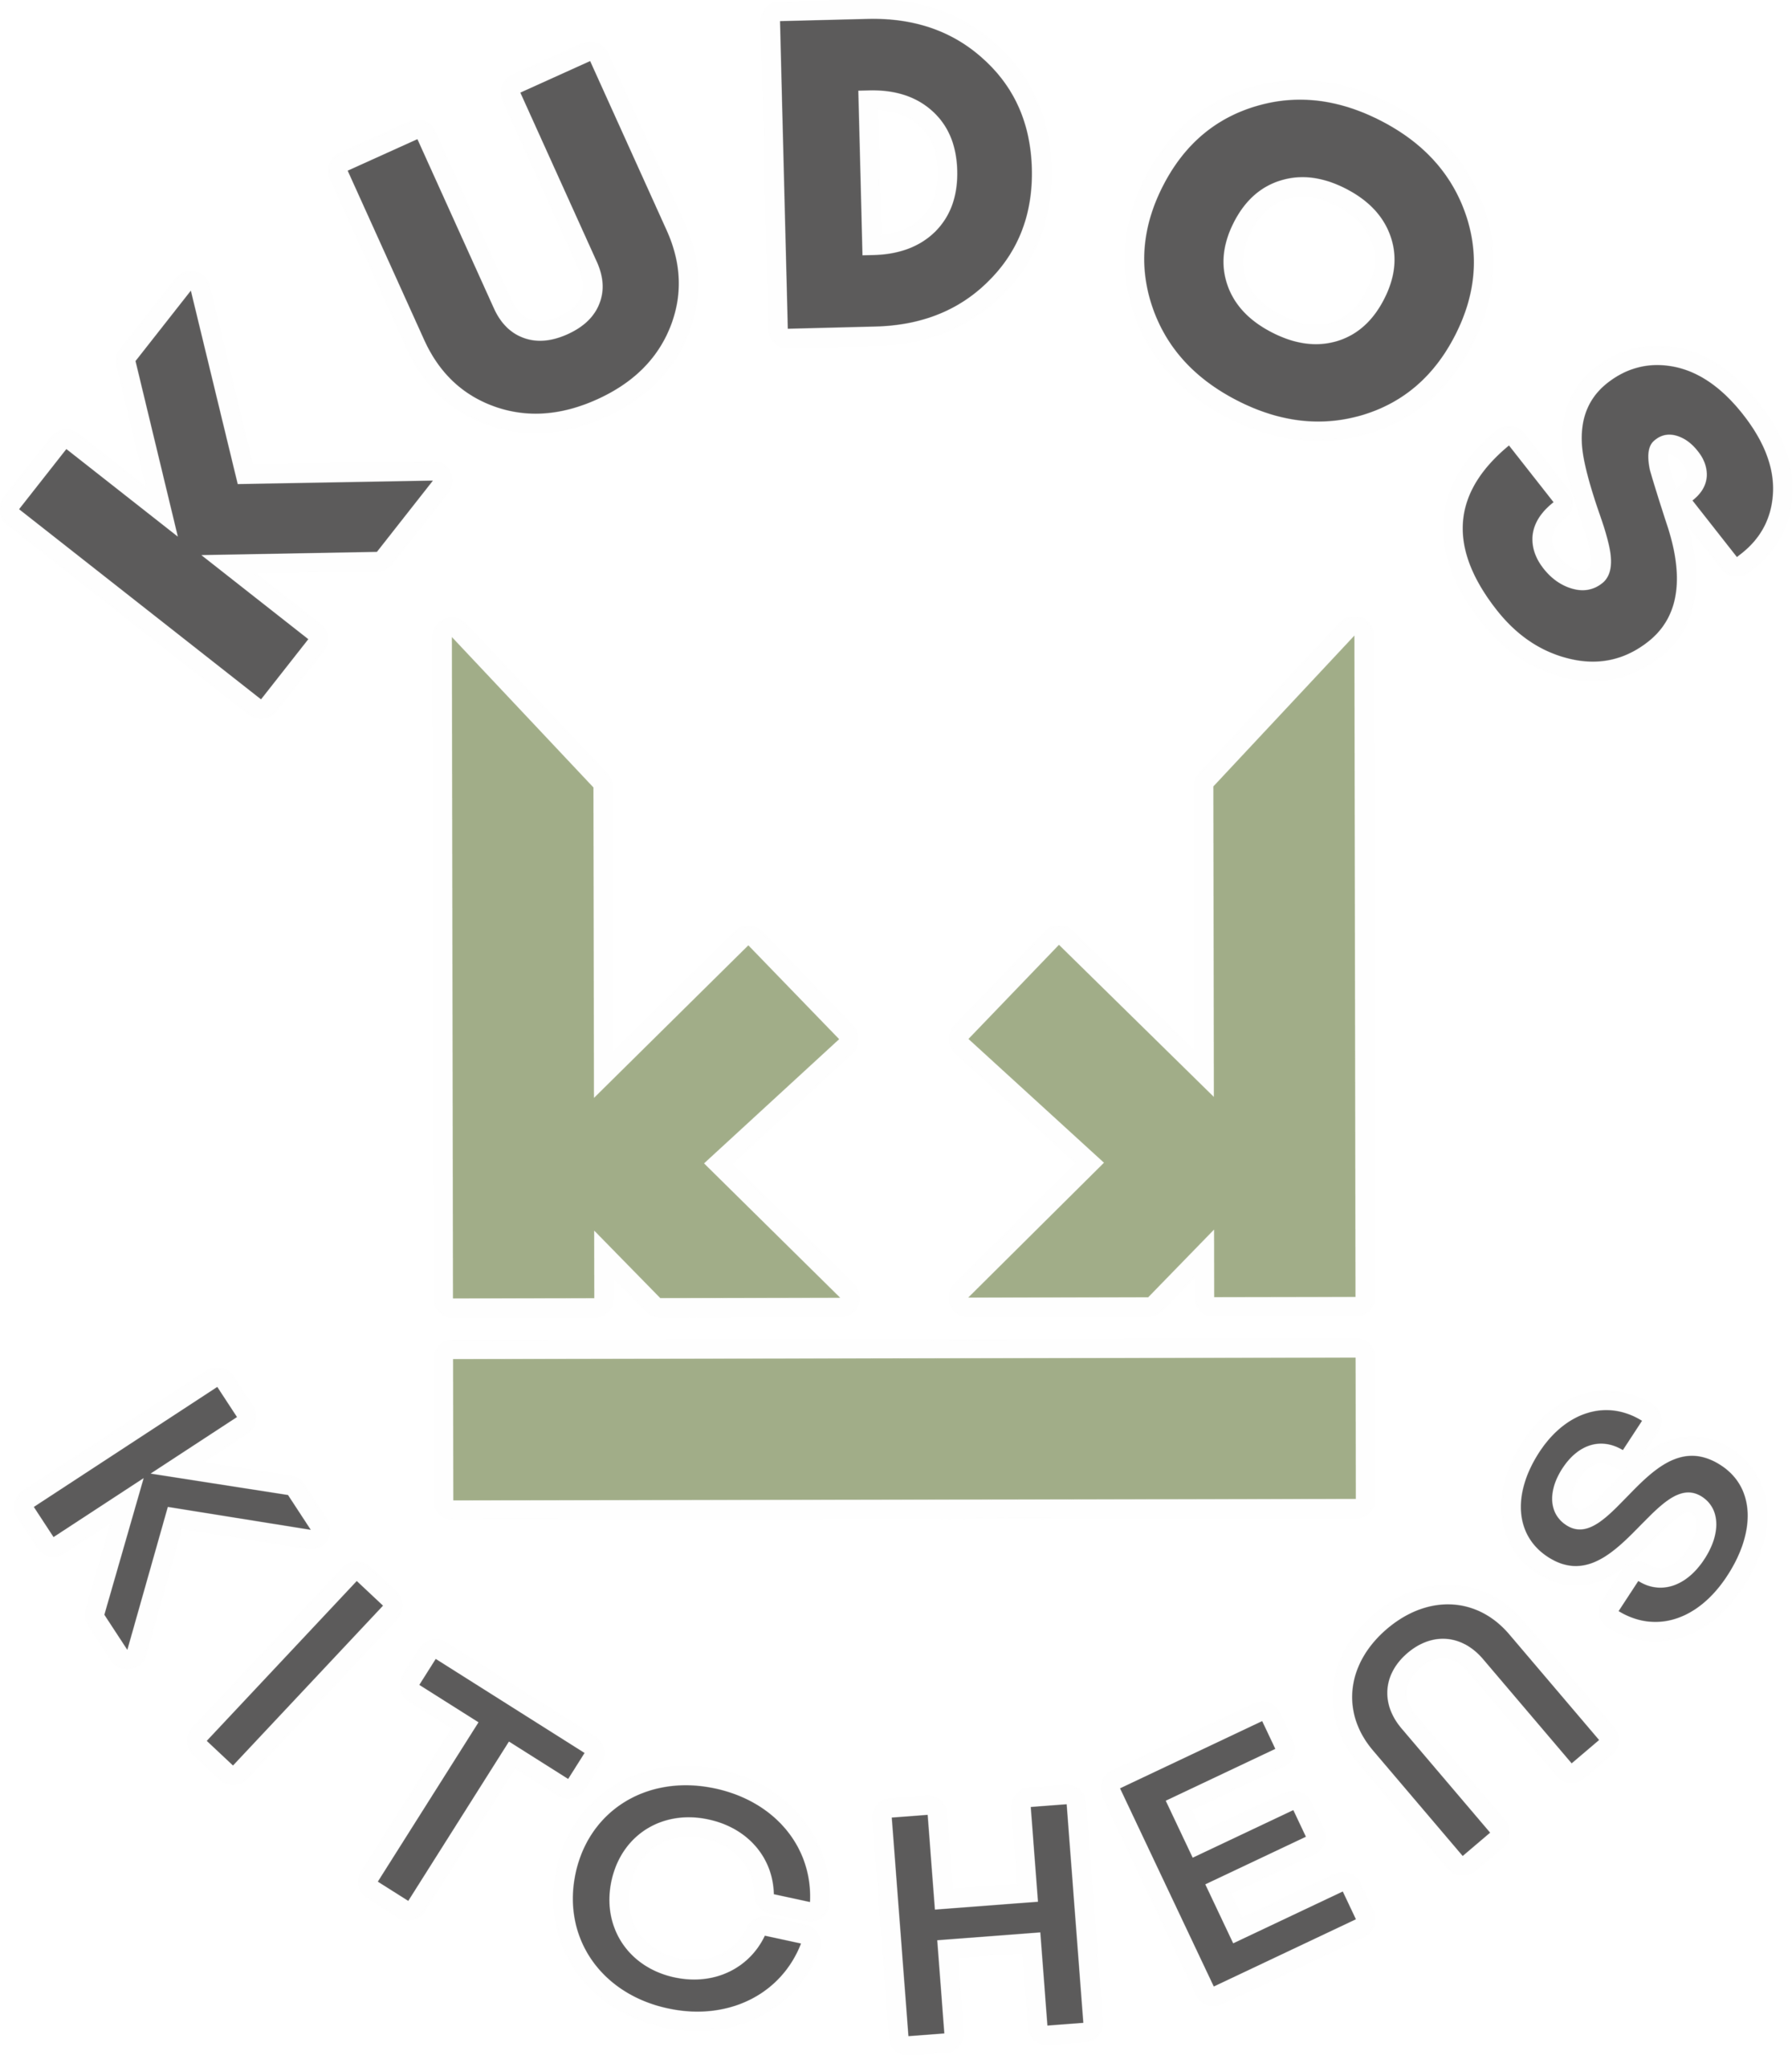 kudos kitchens logo kitchens mansfield kitchens showroom kitchen design central